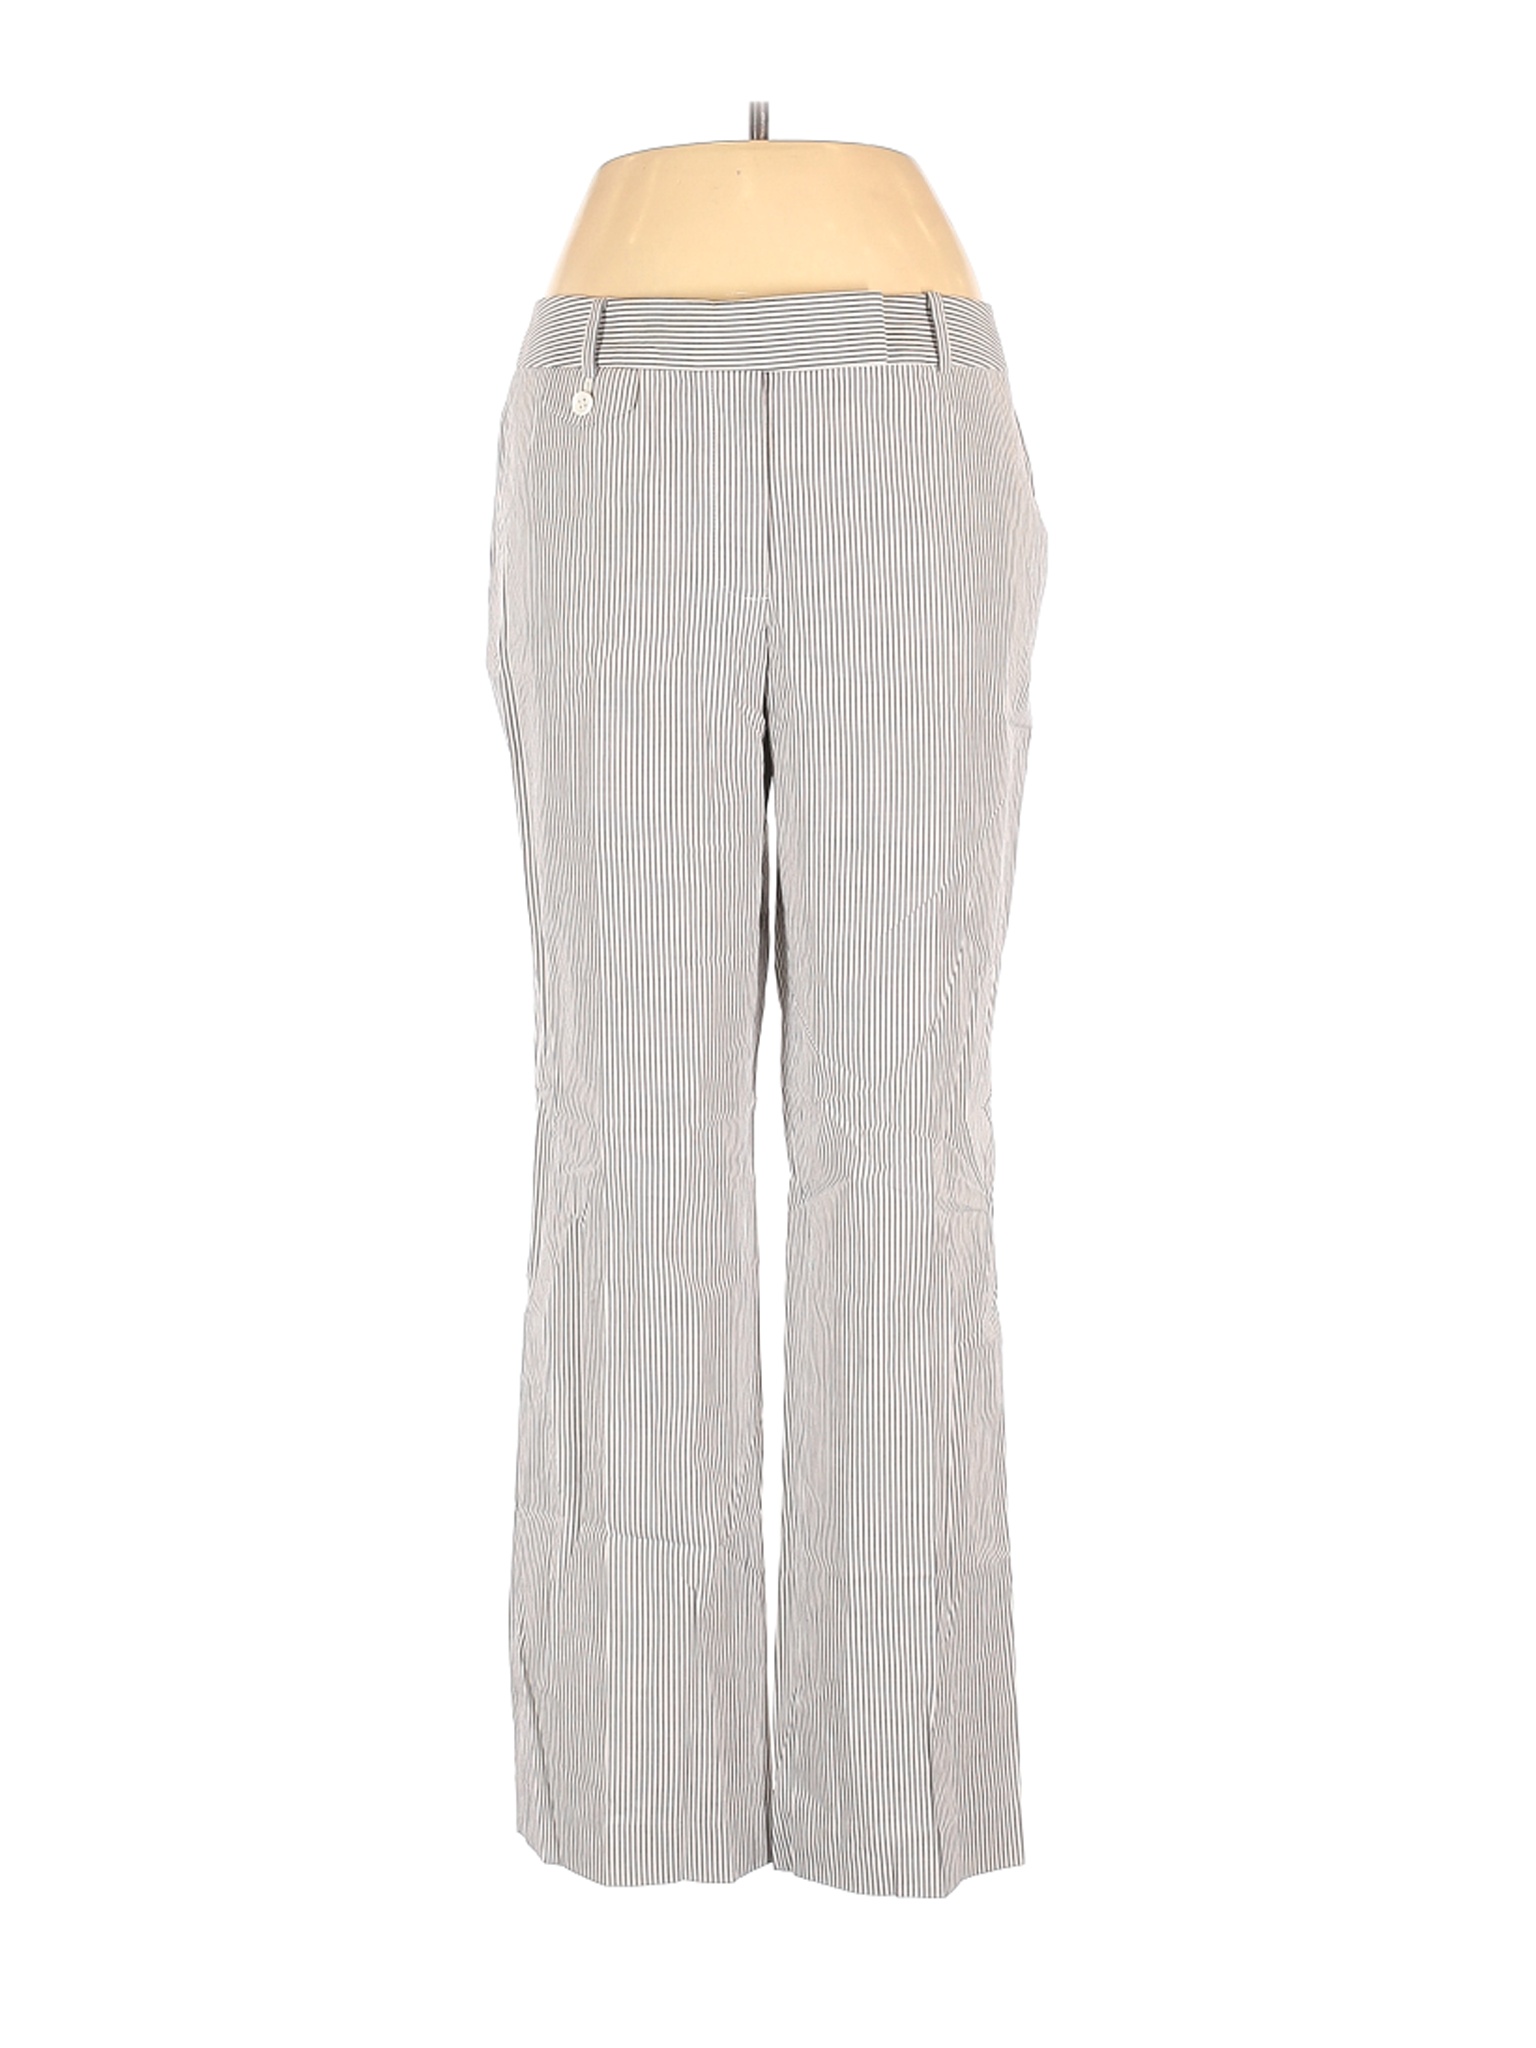 Talbots Women Gray Casual Pants 12 Petites | eBay